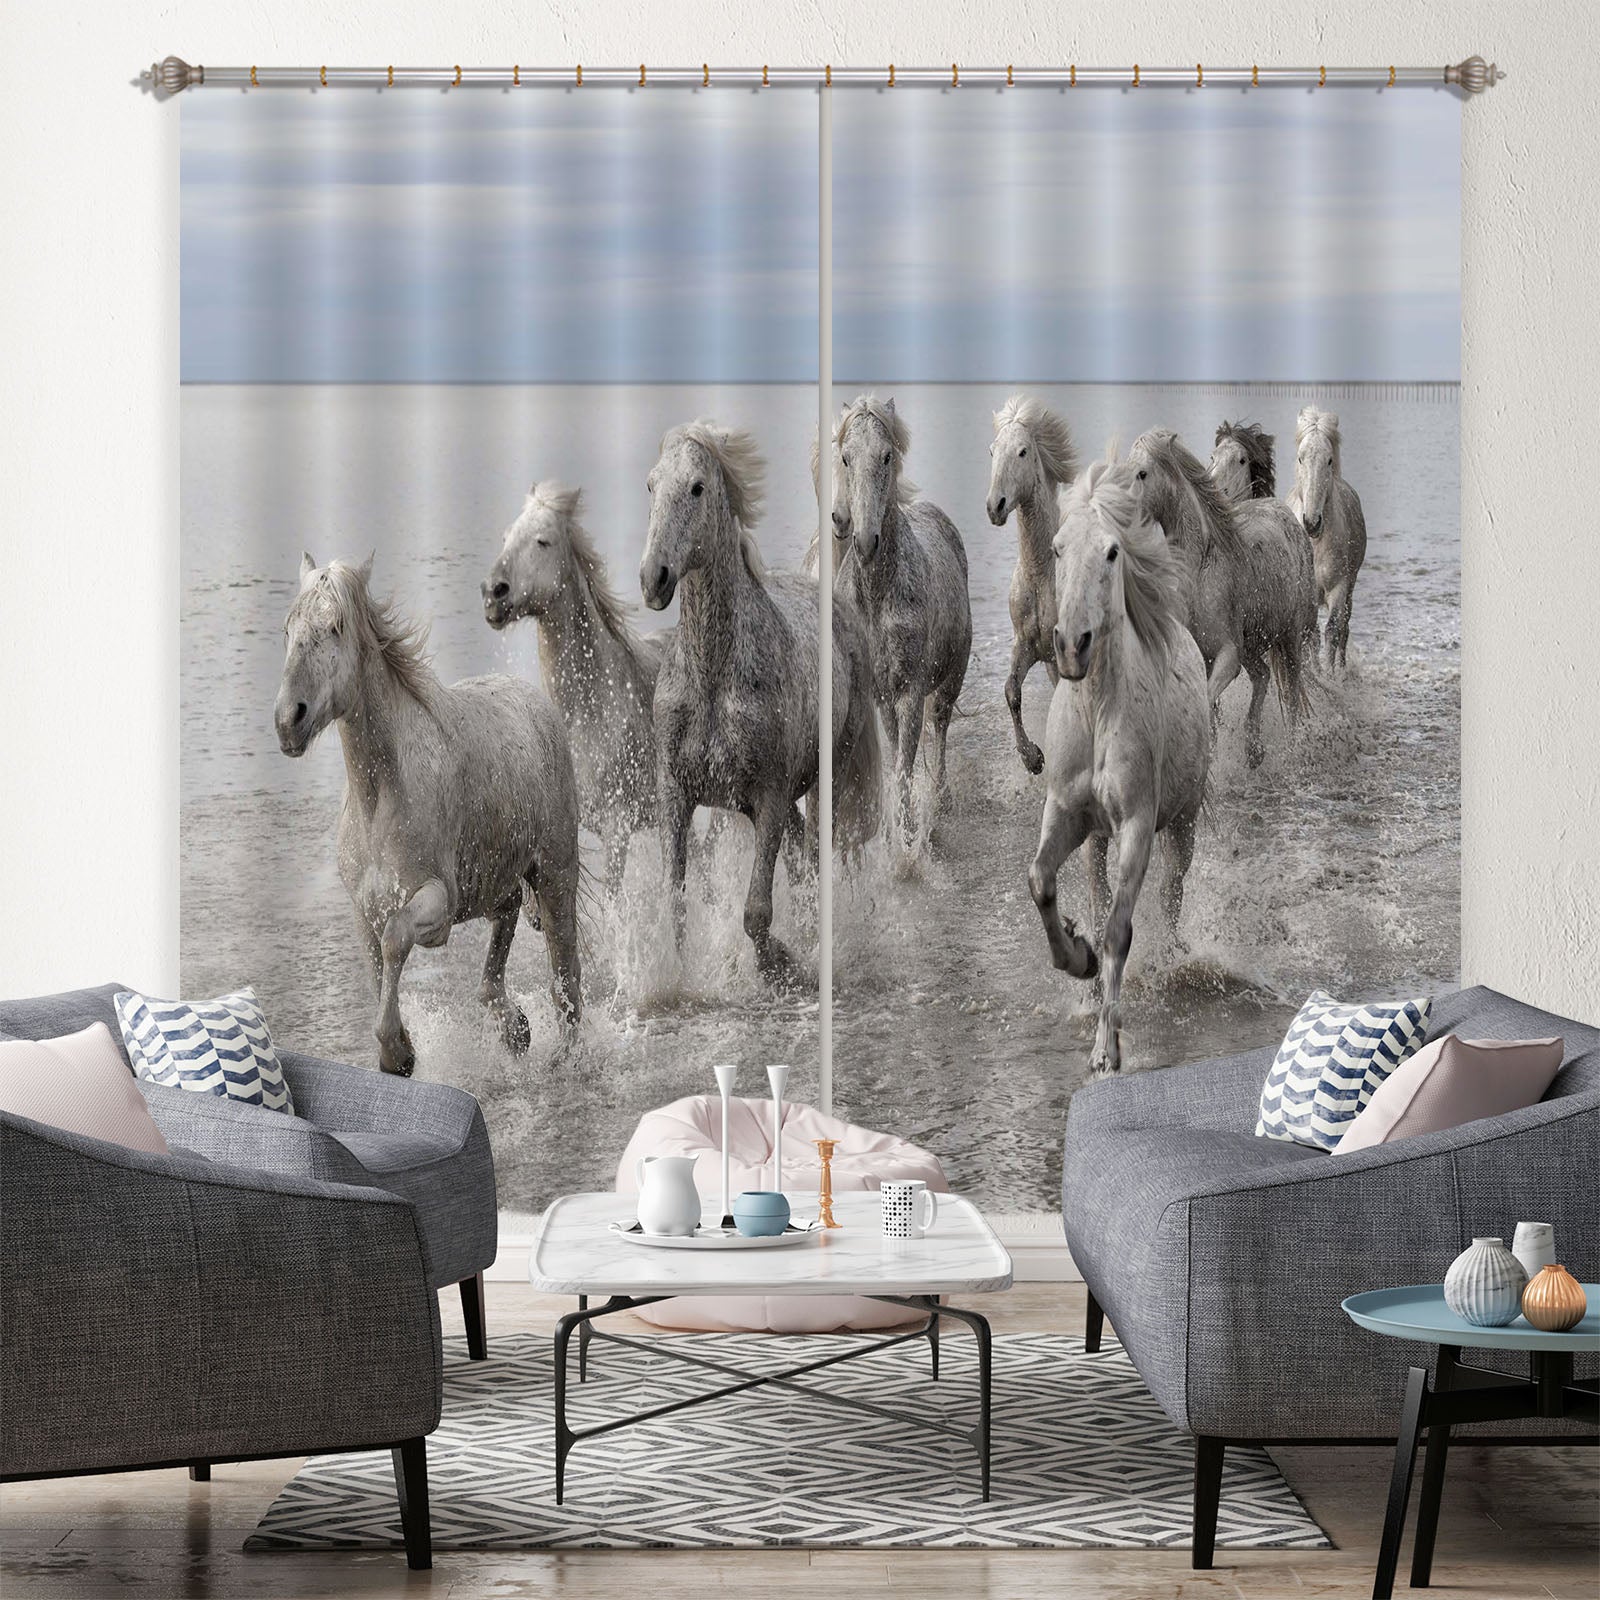 3D White Horse 155 Marco Carmassi Curtain Curtains Drapes